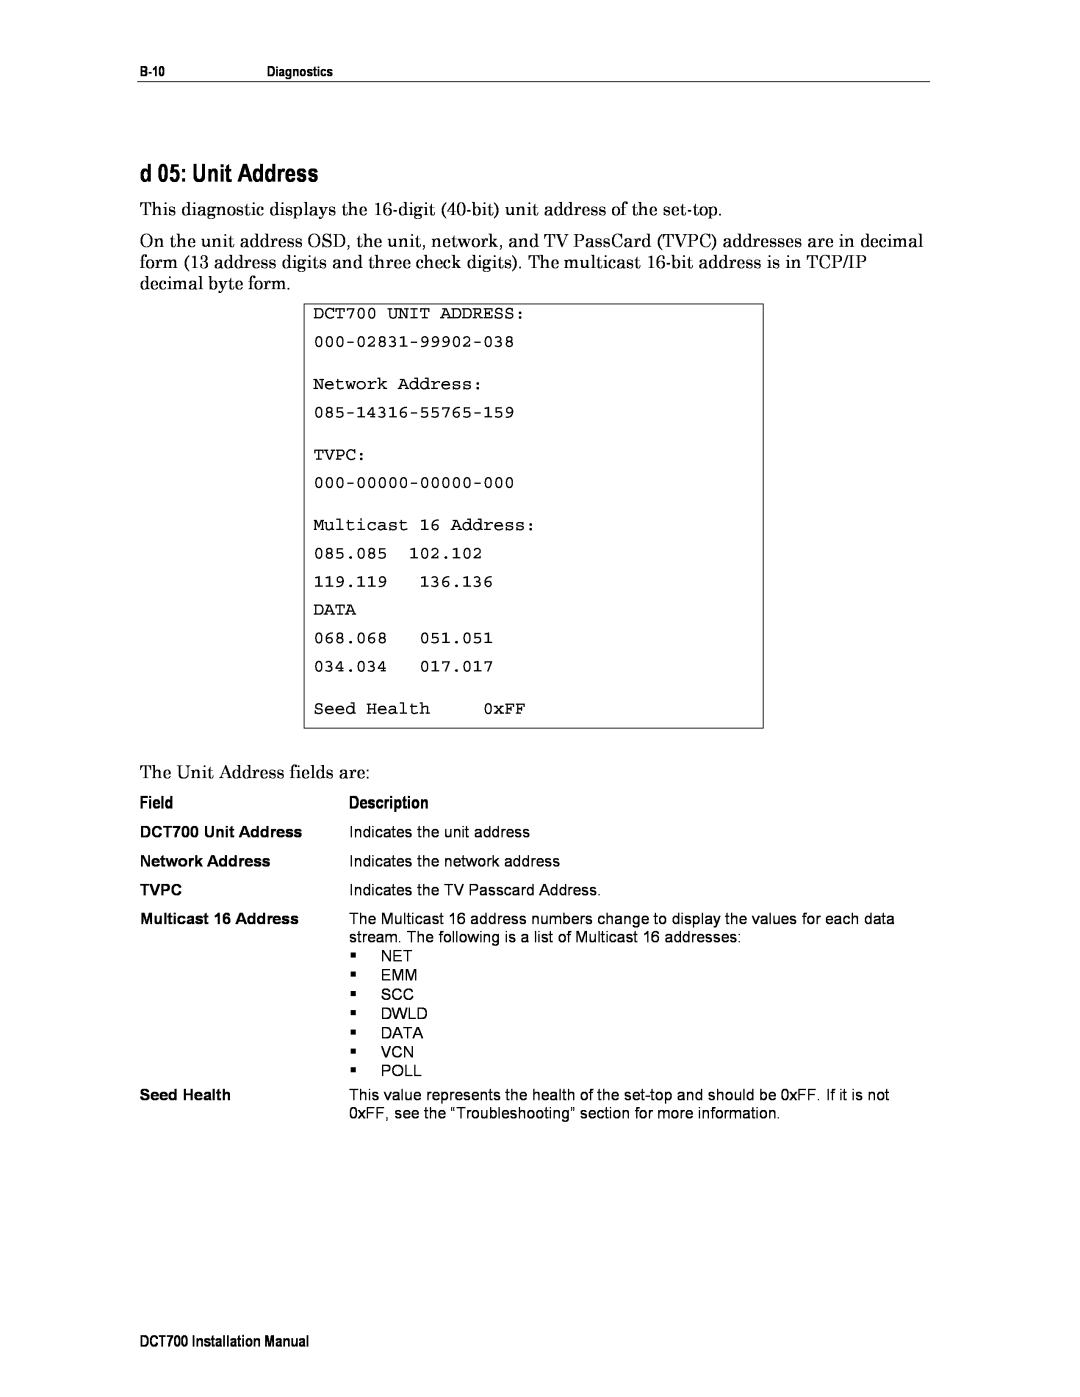 Motorola DCT700, DTC700 installation manual d 05: Unit Address, Field, Description 